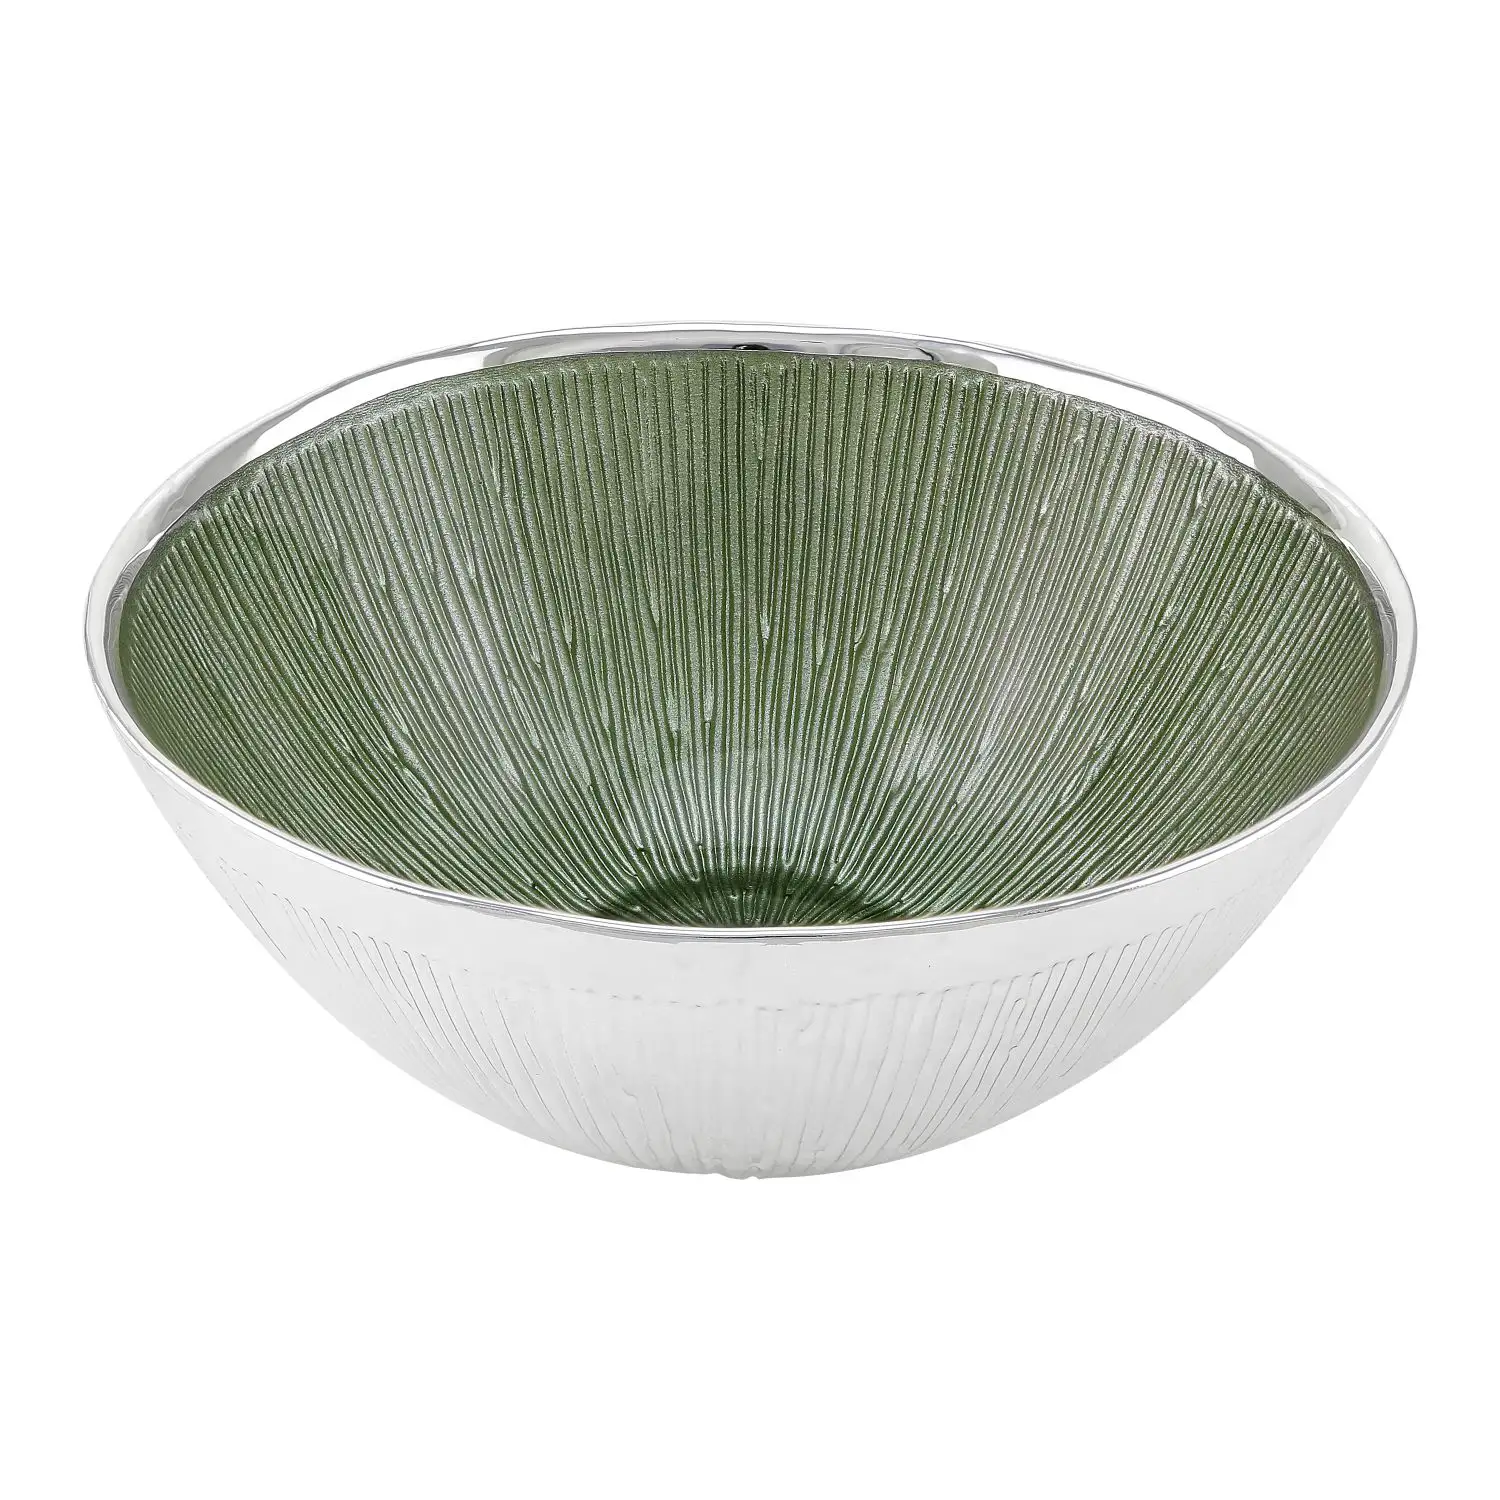 Чаша стеклянная SVASATA (цвет зеленый) диаметр 18 см, высота 7,5 см